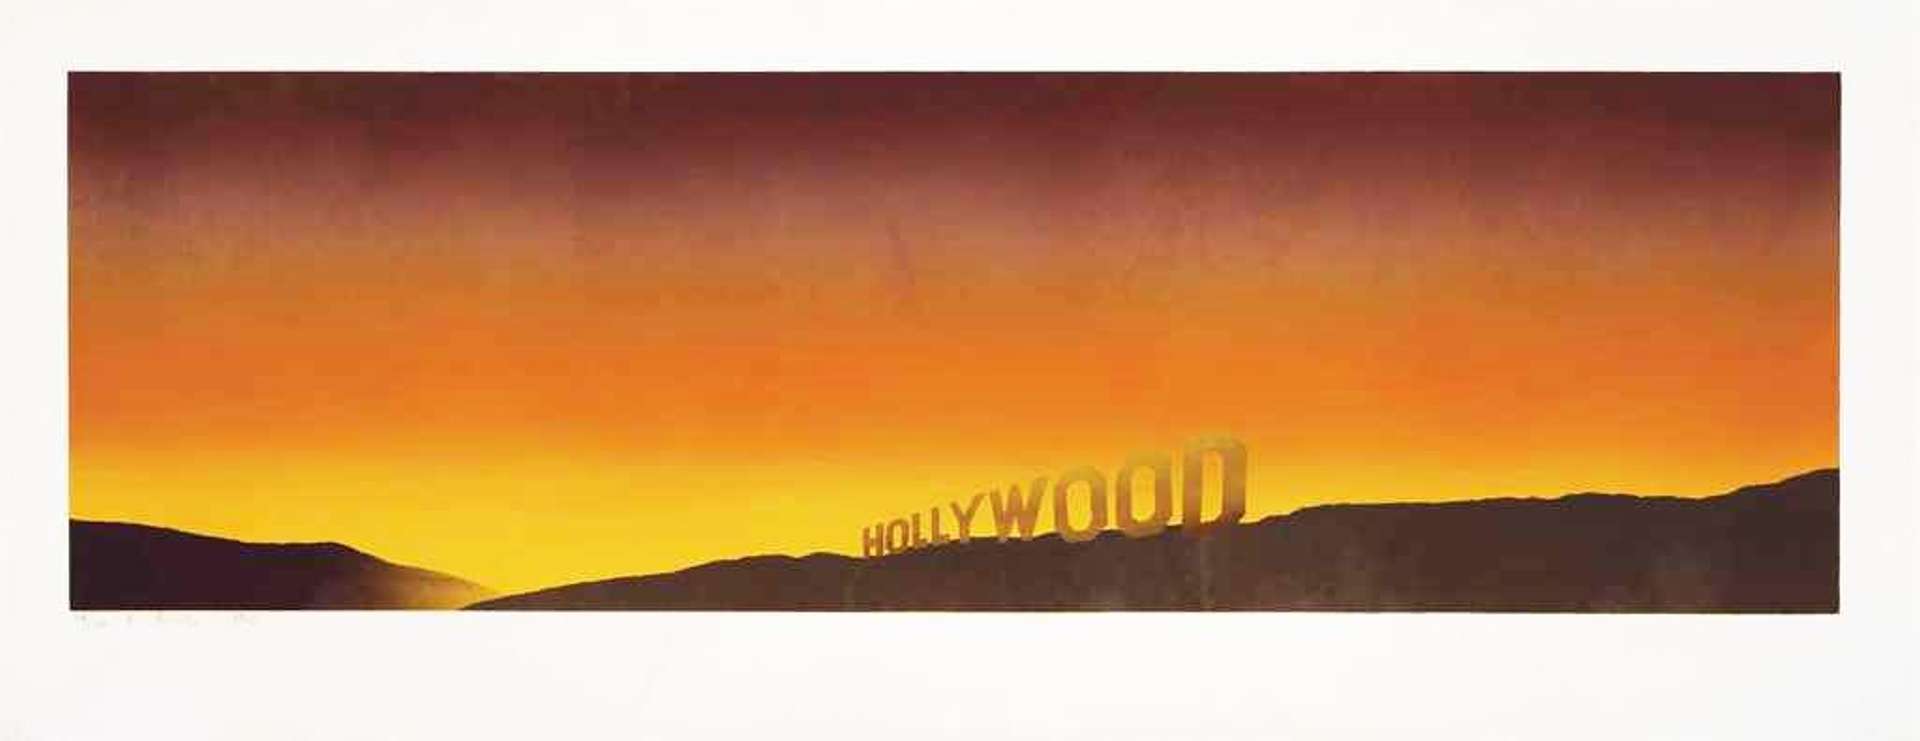 Ed Ruscha: Hollywood - Signed Print